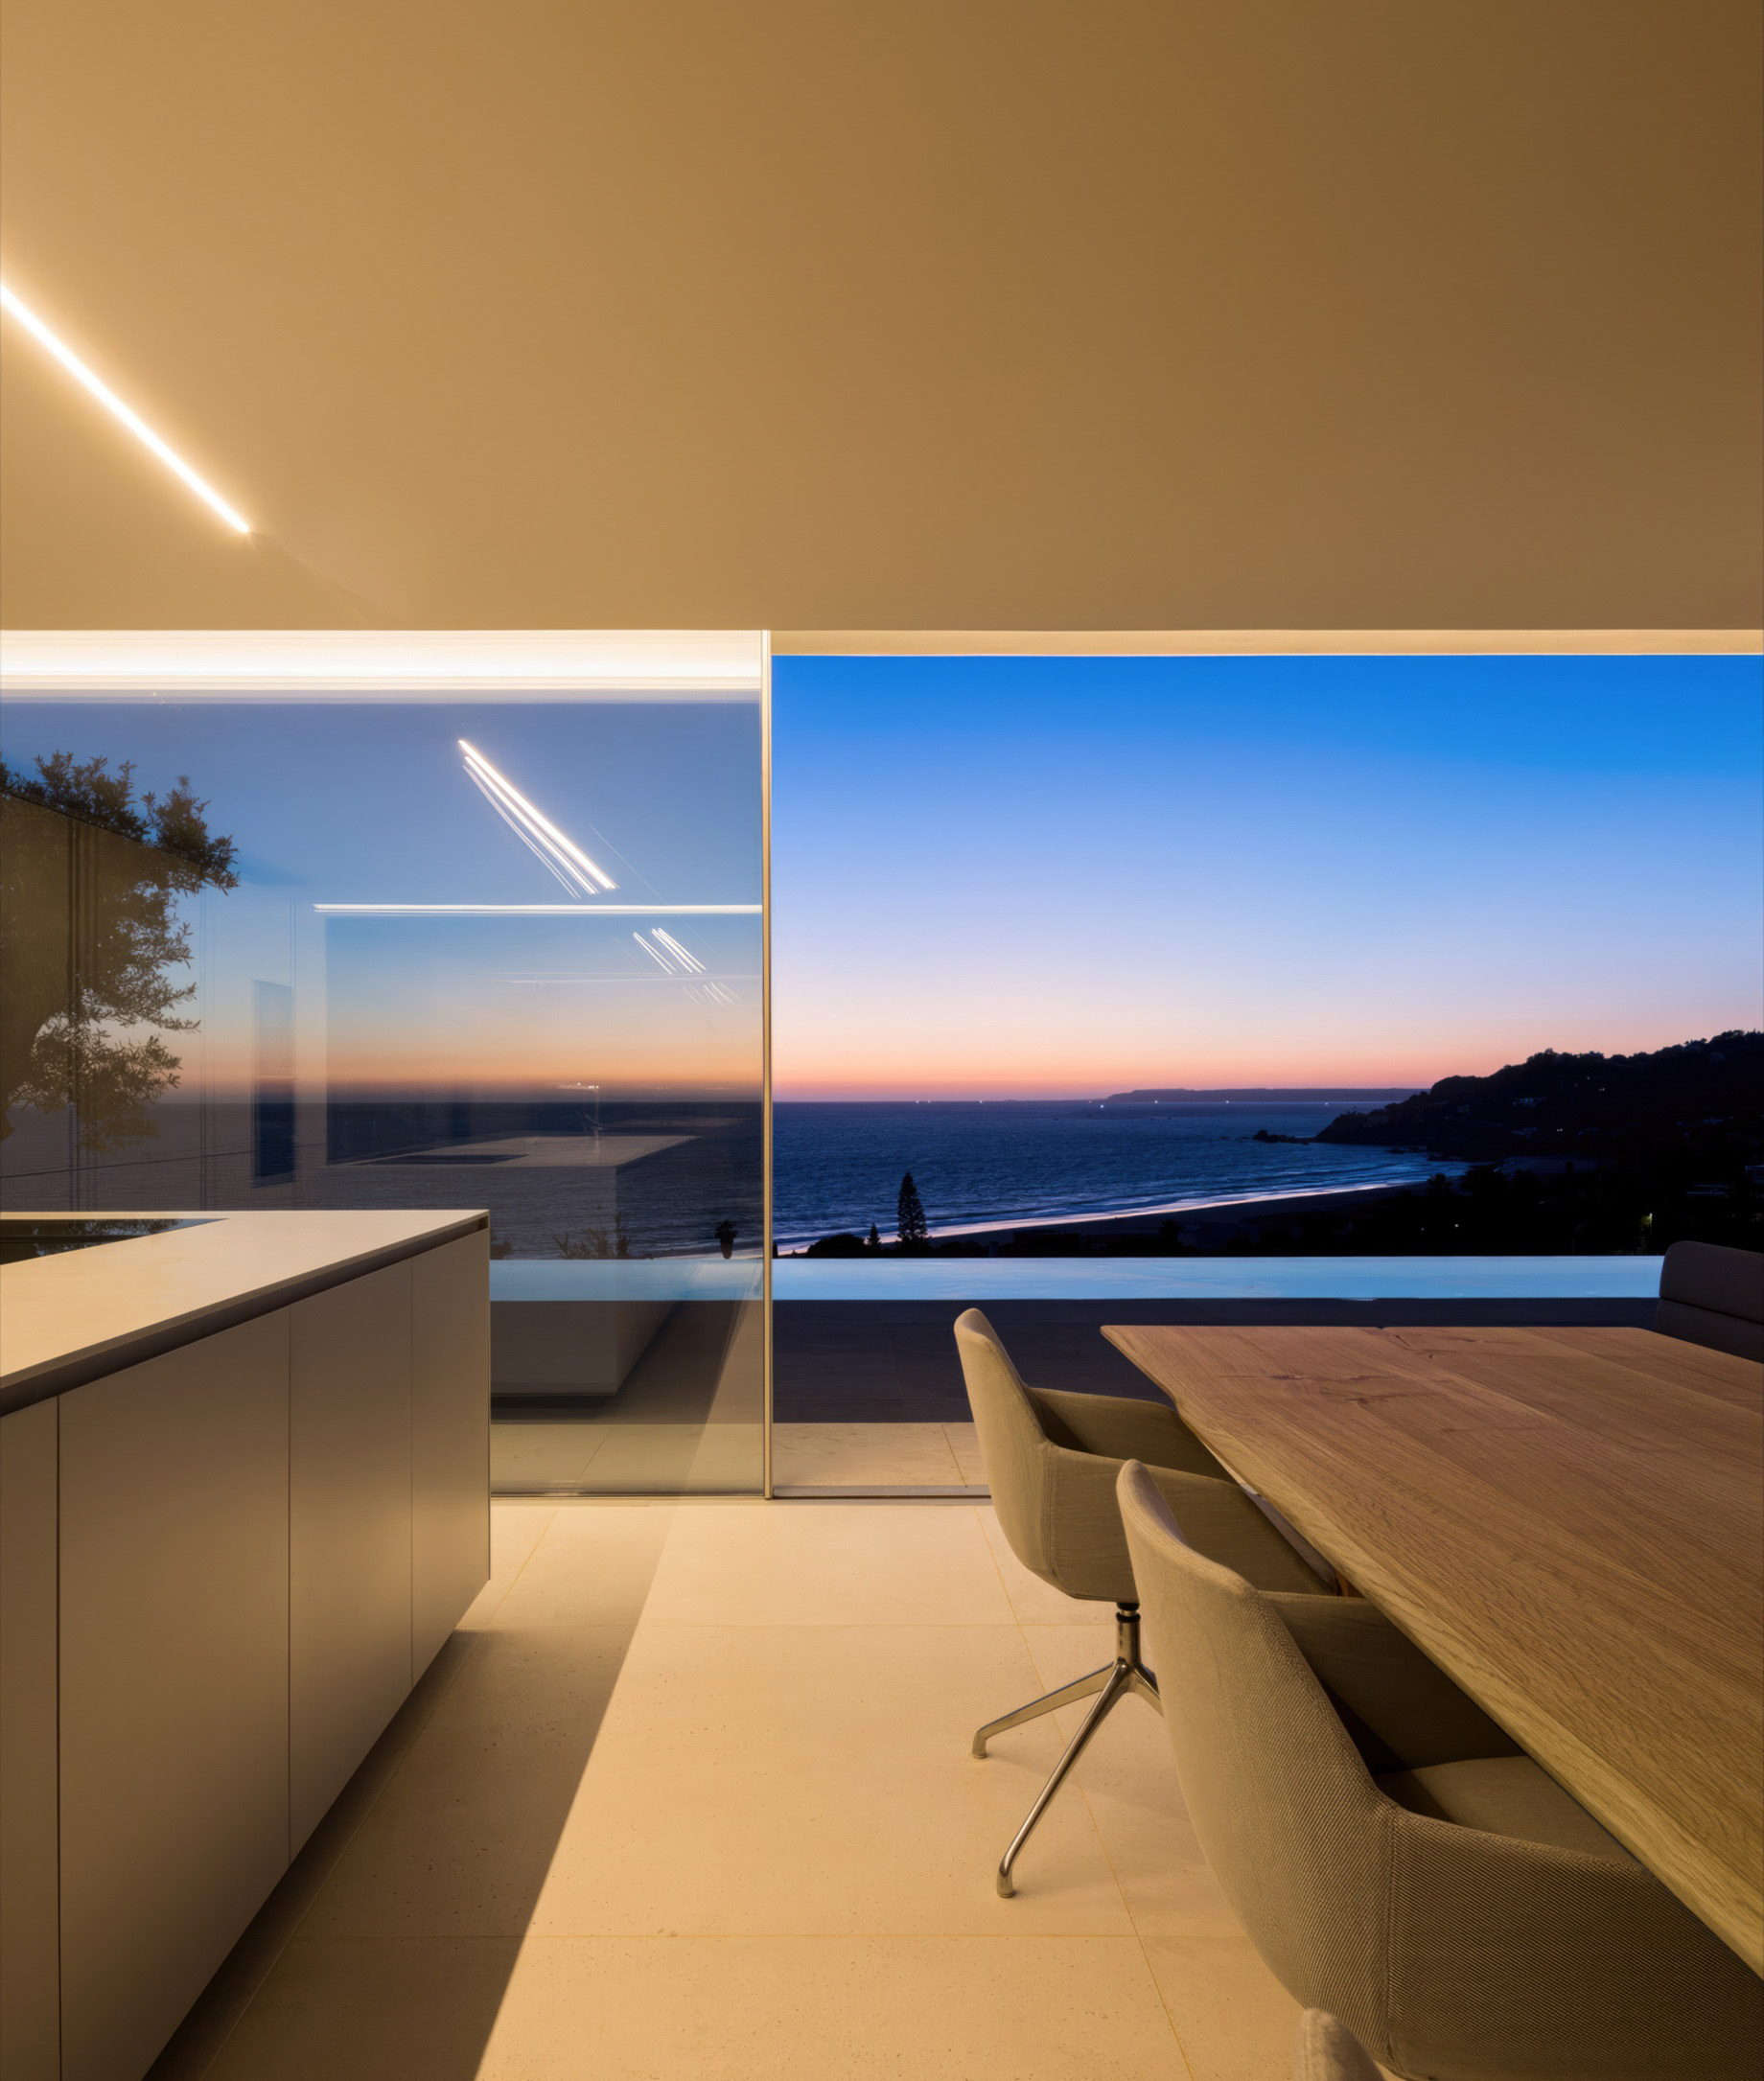 House on the Air Modern Contemporary Villa – Zahara de los Atunes, Spain – 66